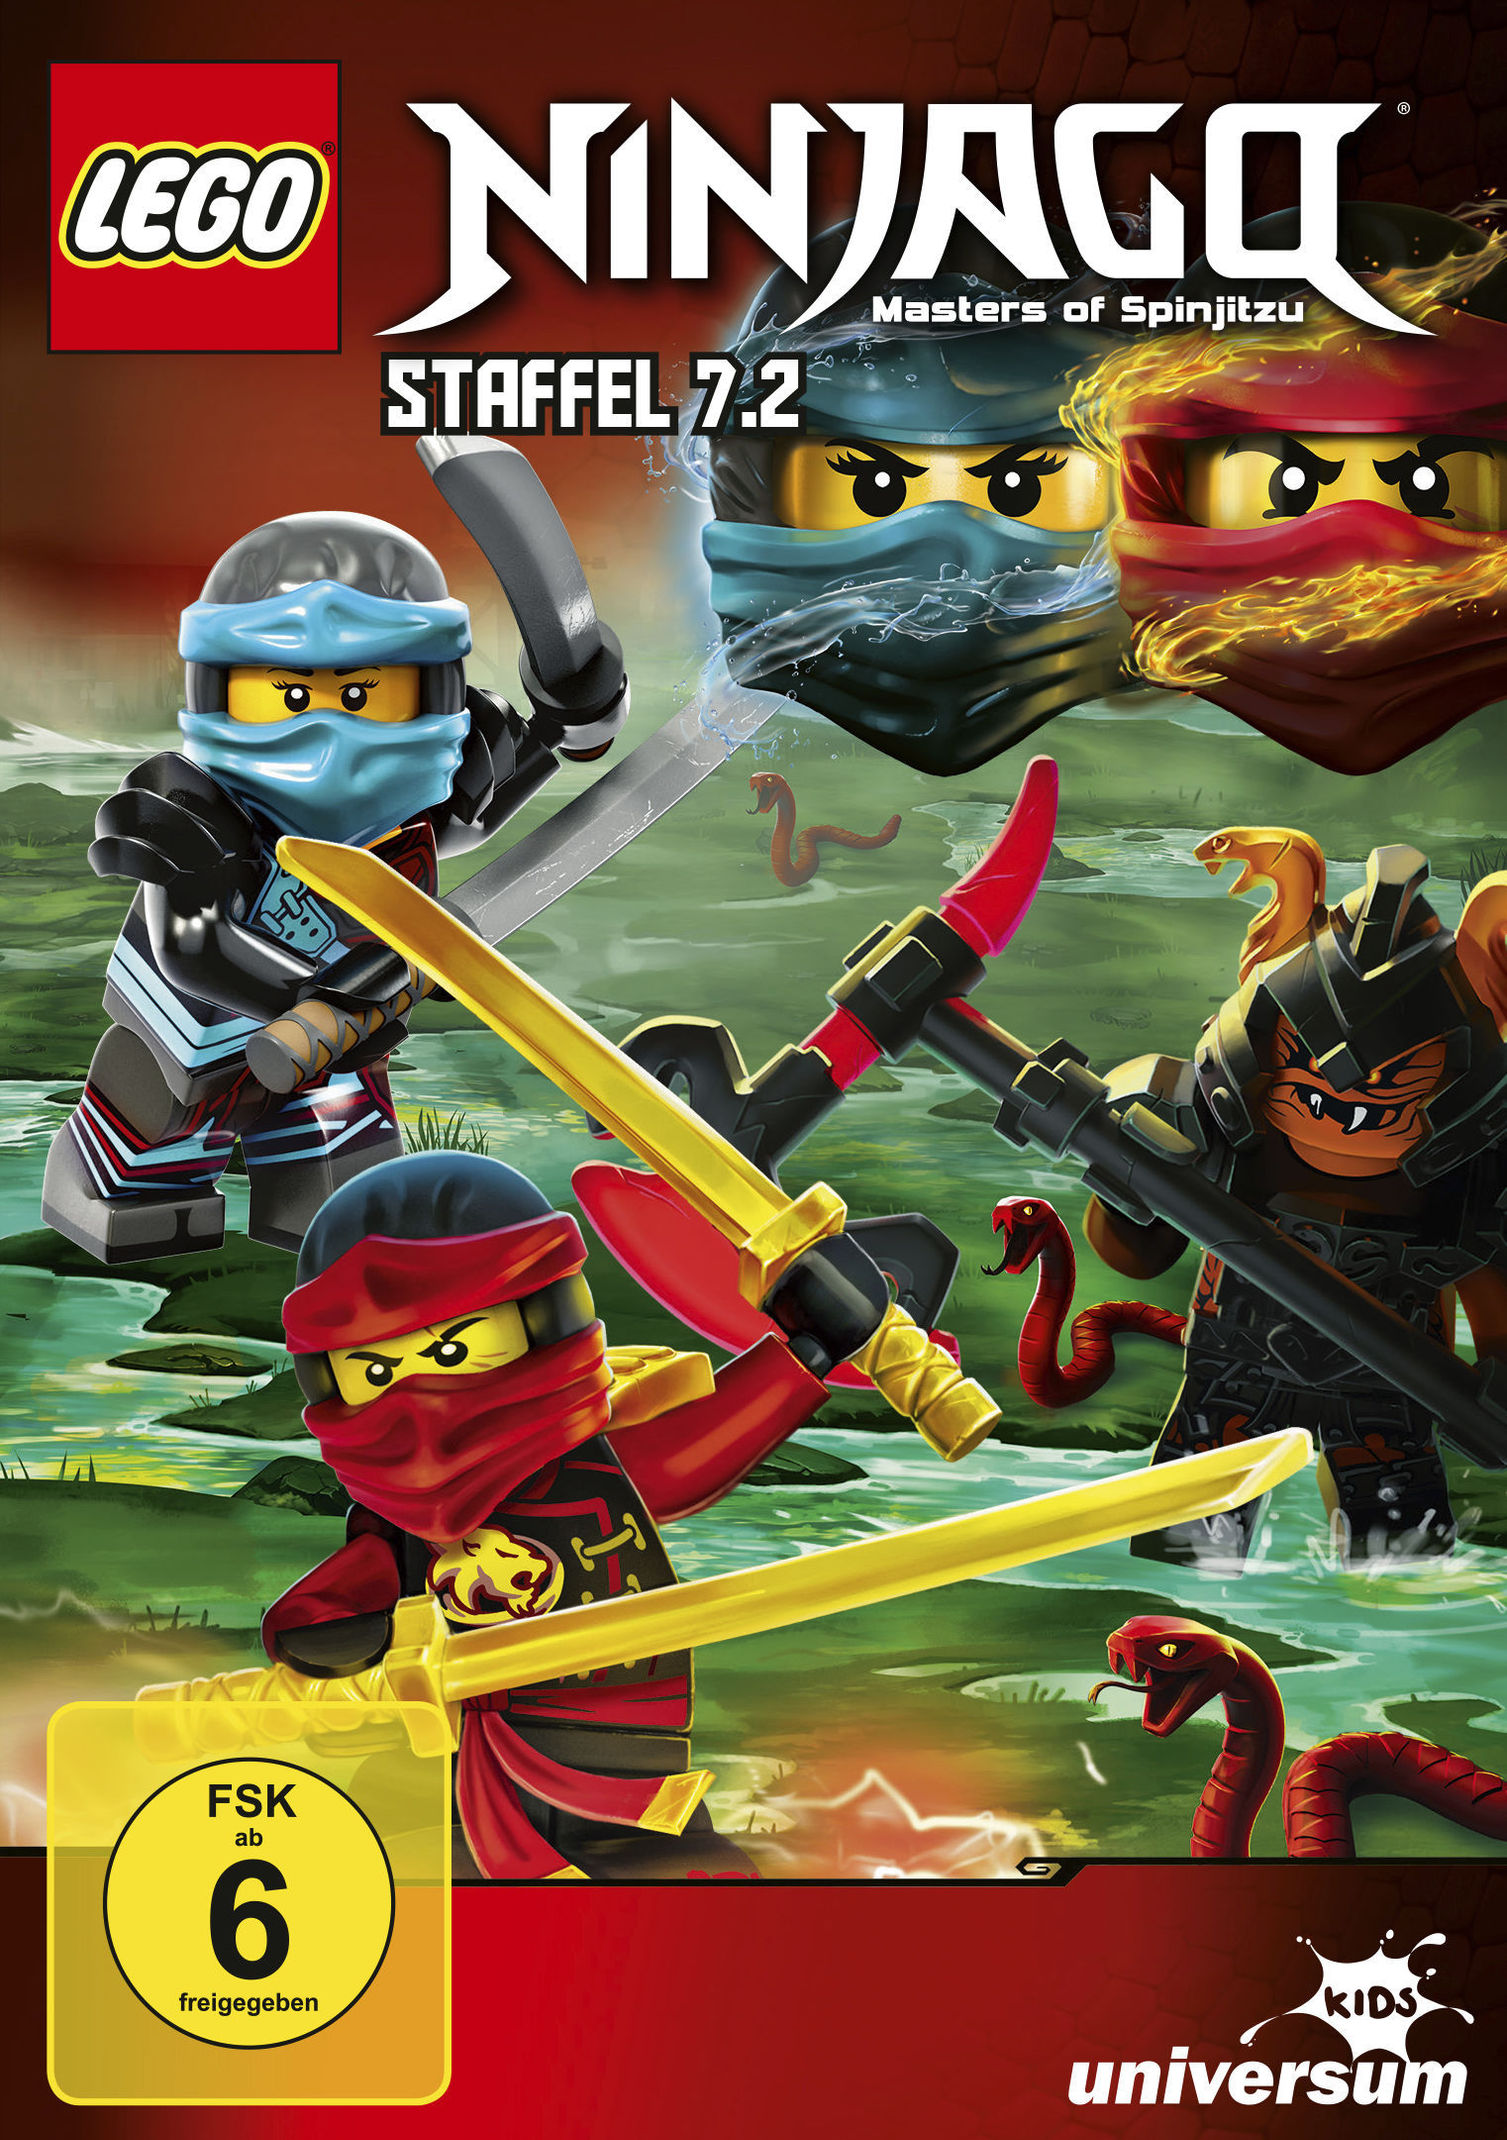 Lego Ninjago - Staffel 7.2 kaufen | tausendkind.at